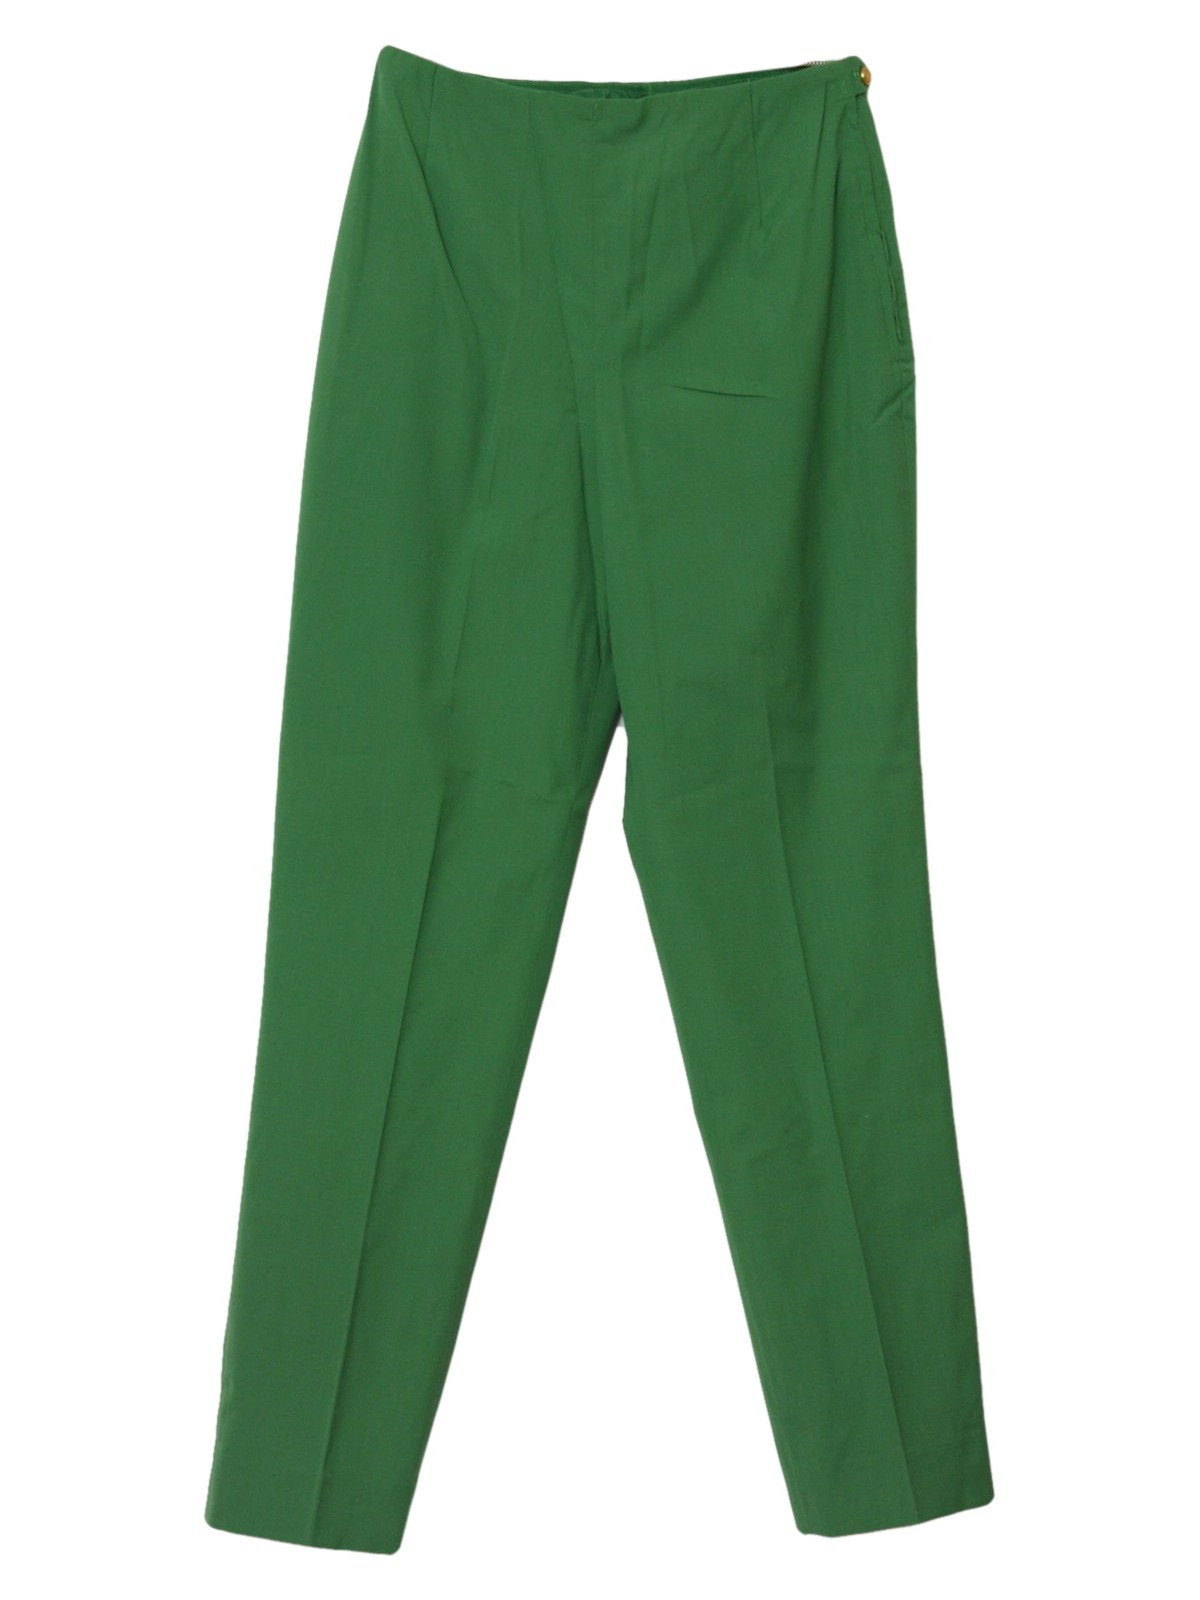 Retro 60s Pants (Majestic) : 60s -Majestic- Womens green background ...